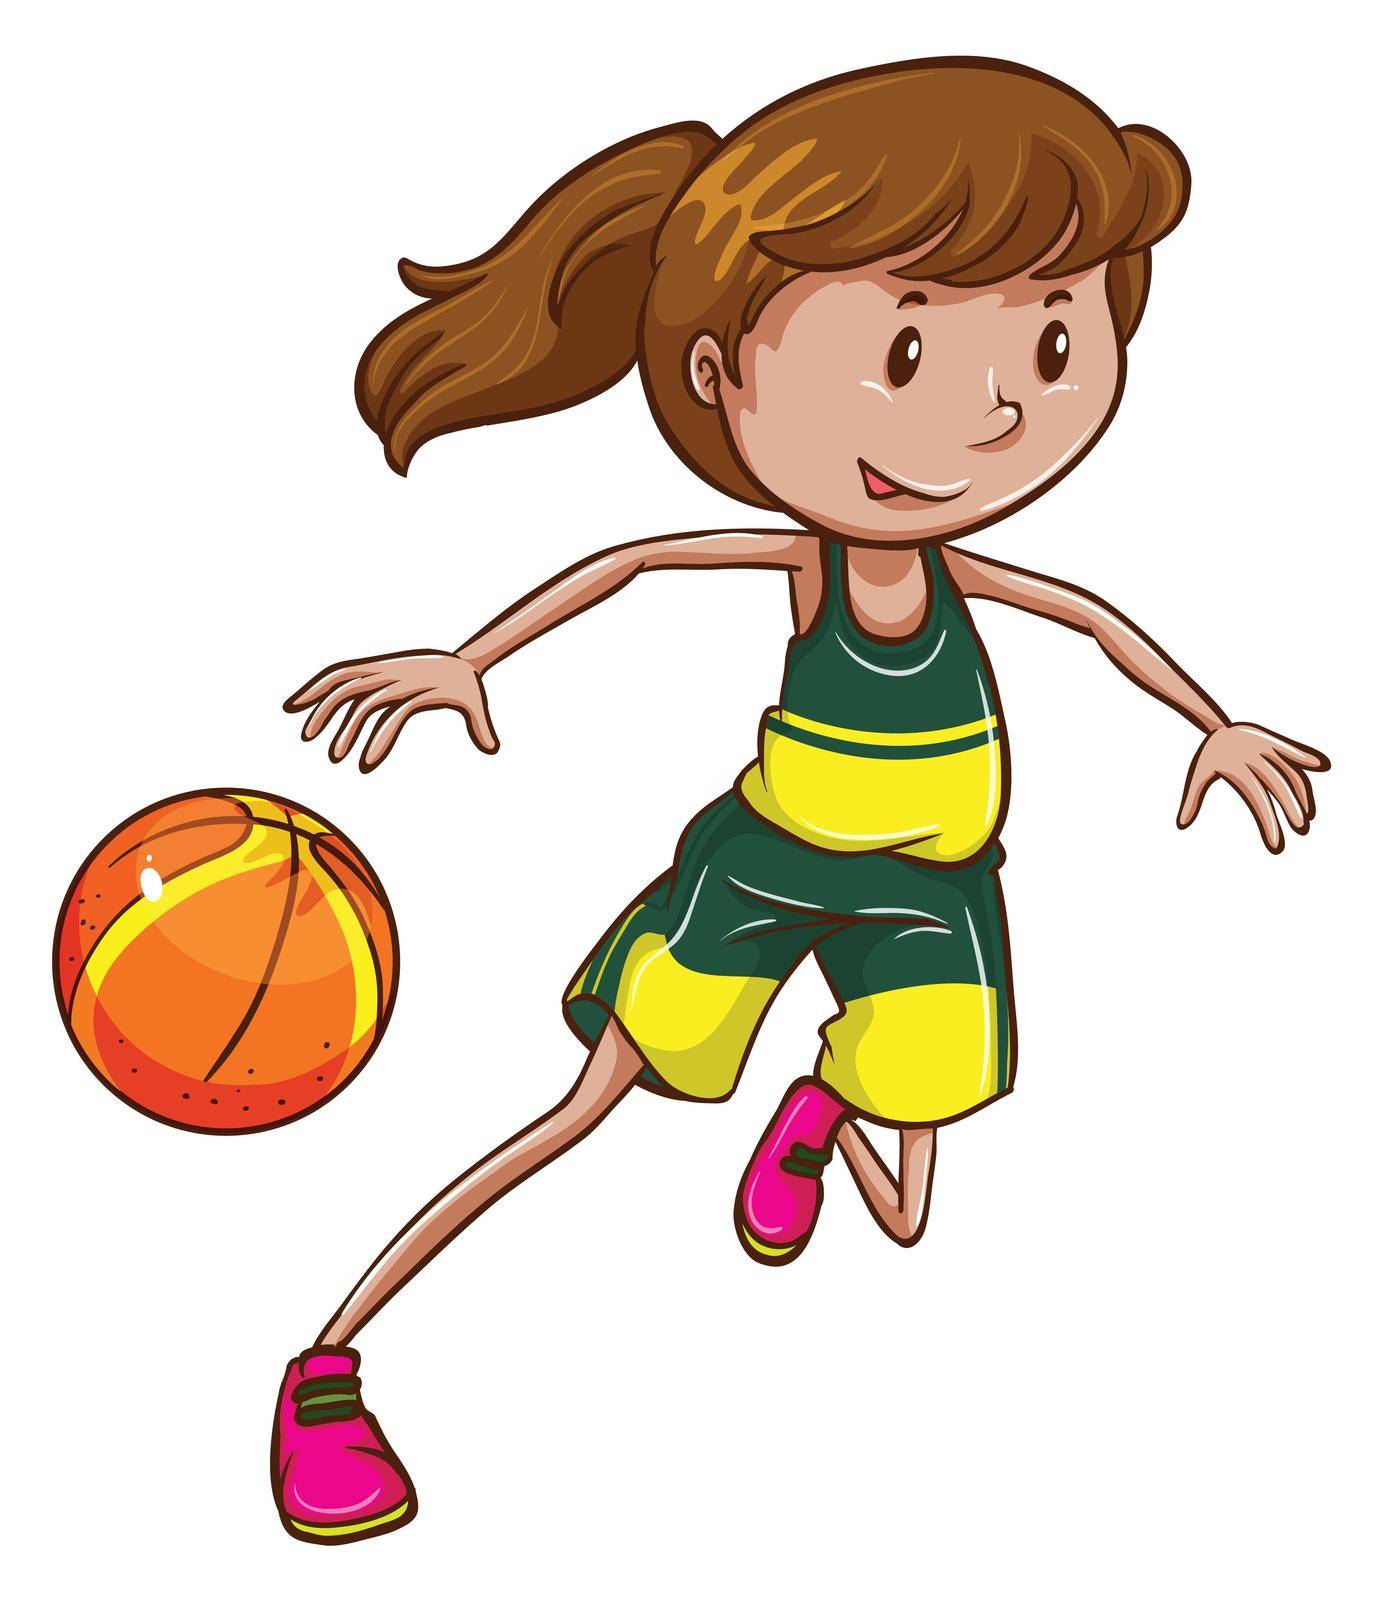 Illustration of a female basketball playeron a white background